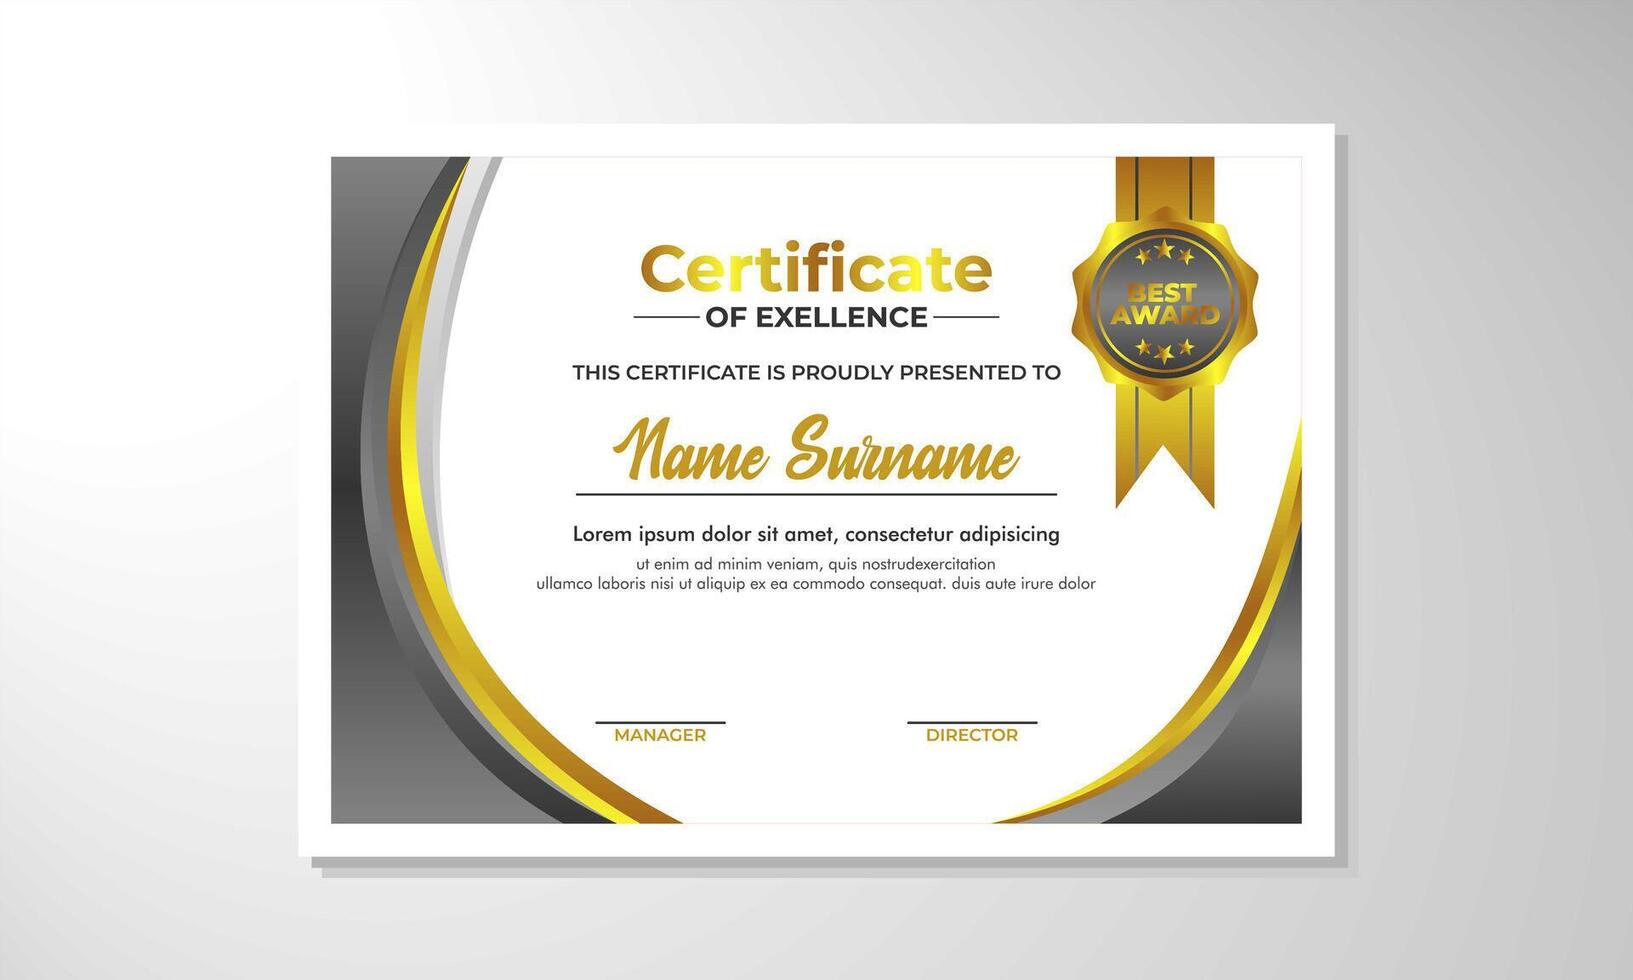 elegant gradient certificate design template vector